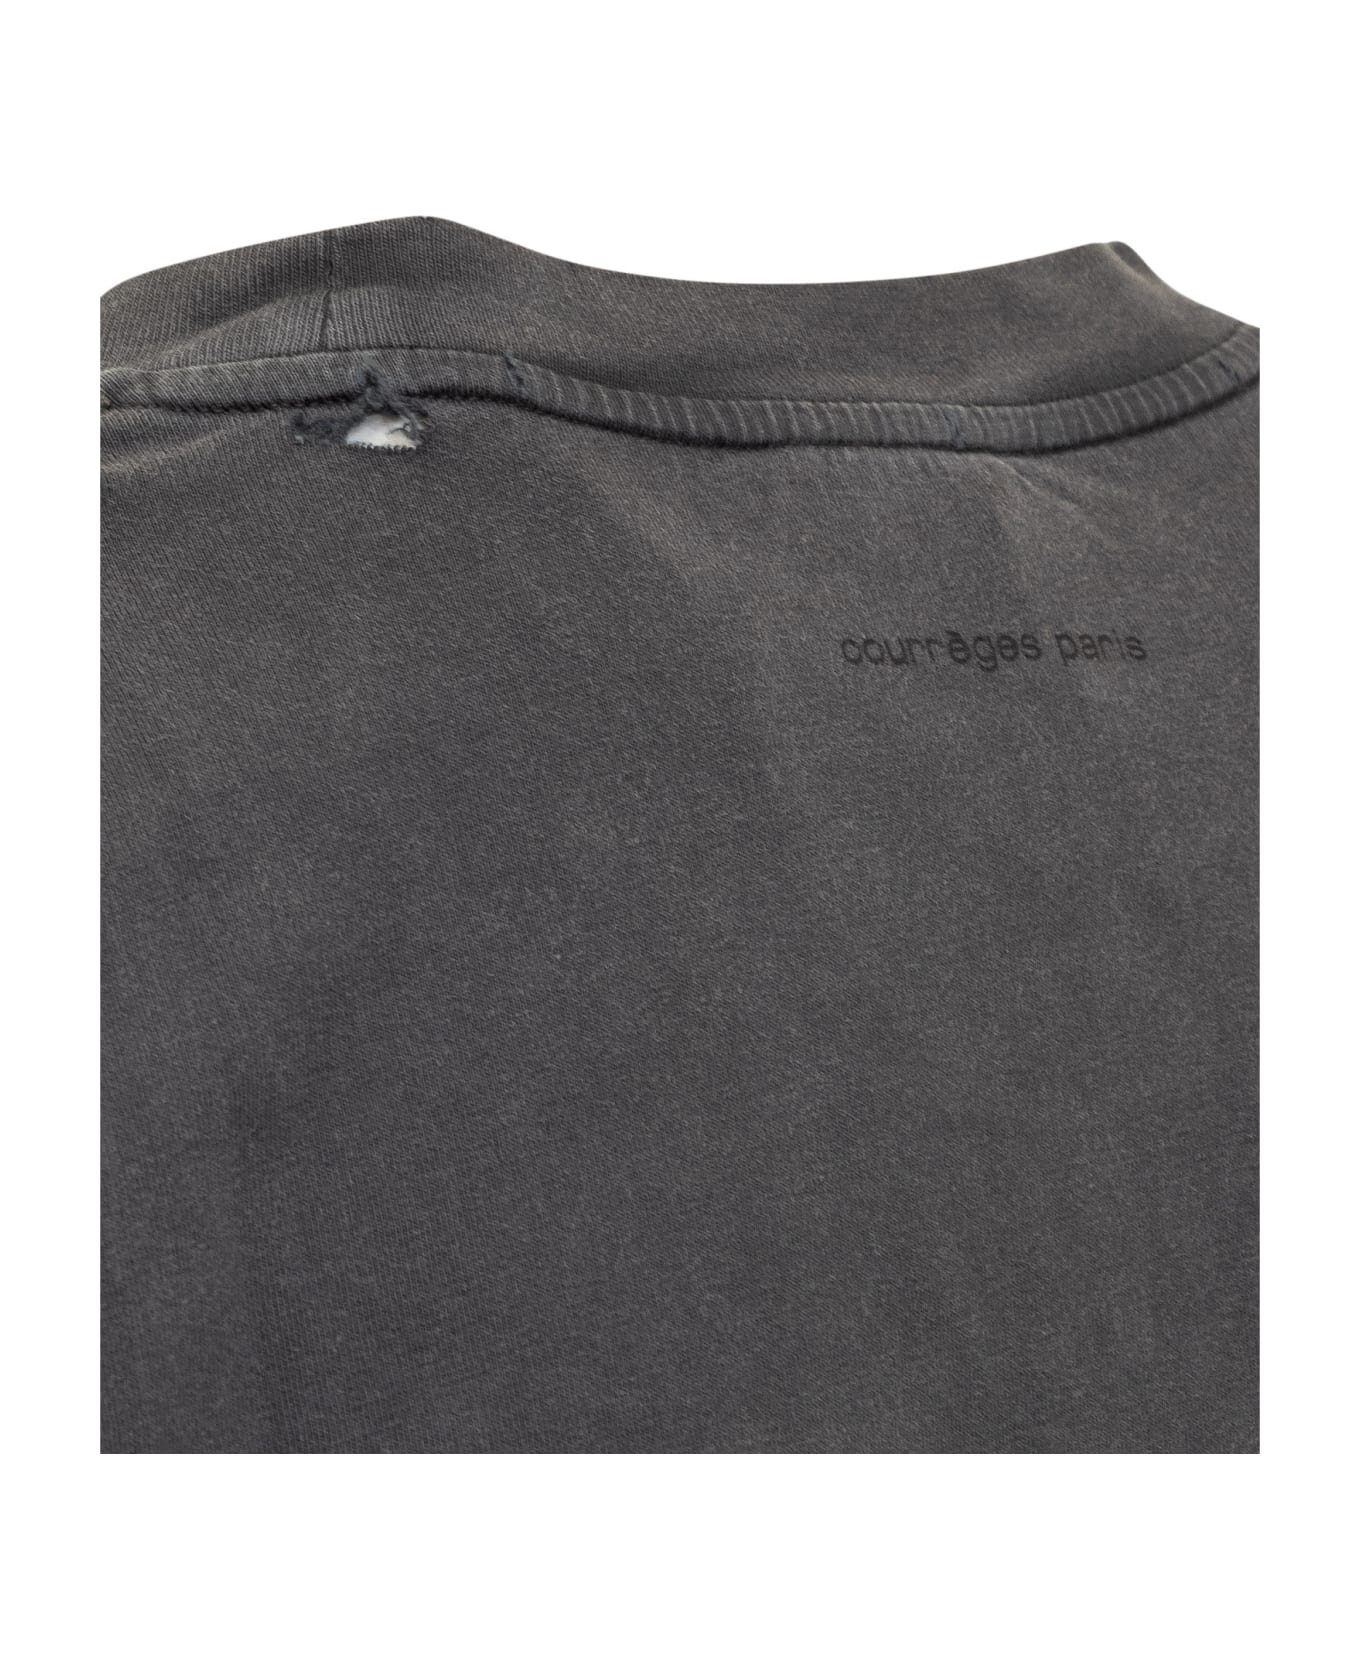 Courrèges Destroyed T-shirt - 9071 STONEWASHED GREY